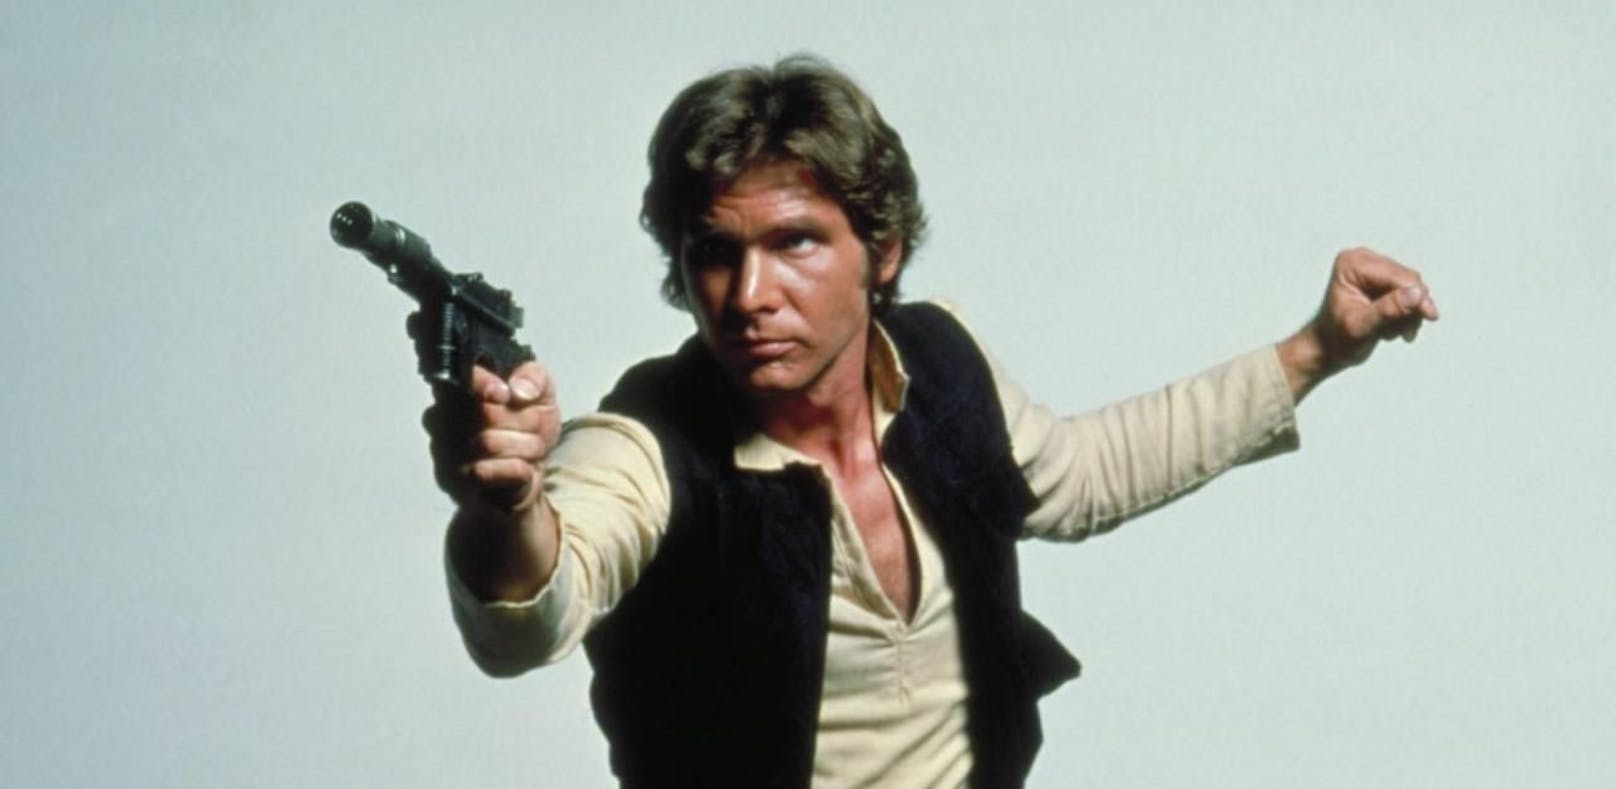 Han Solo ist der beste "Star Wars"-Charakter